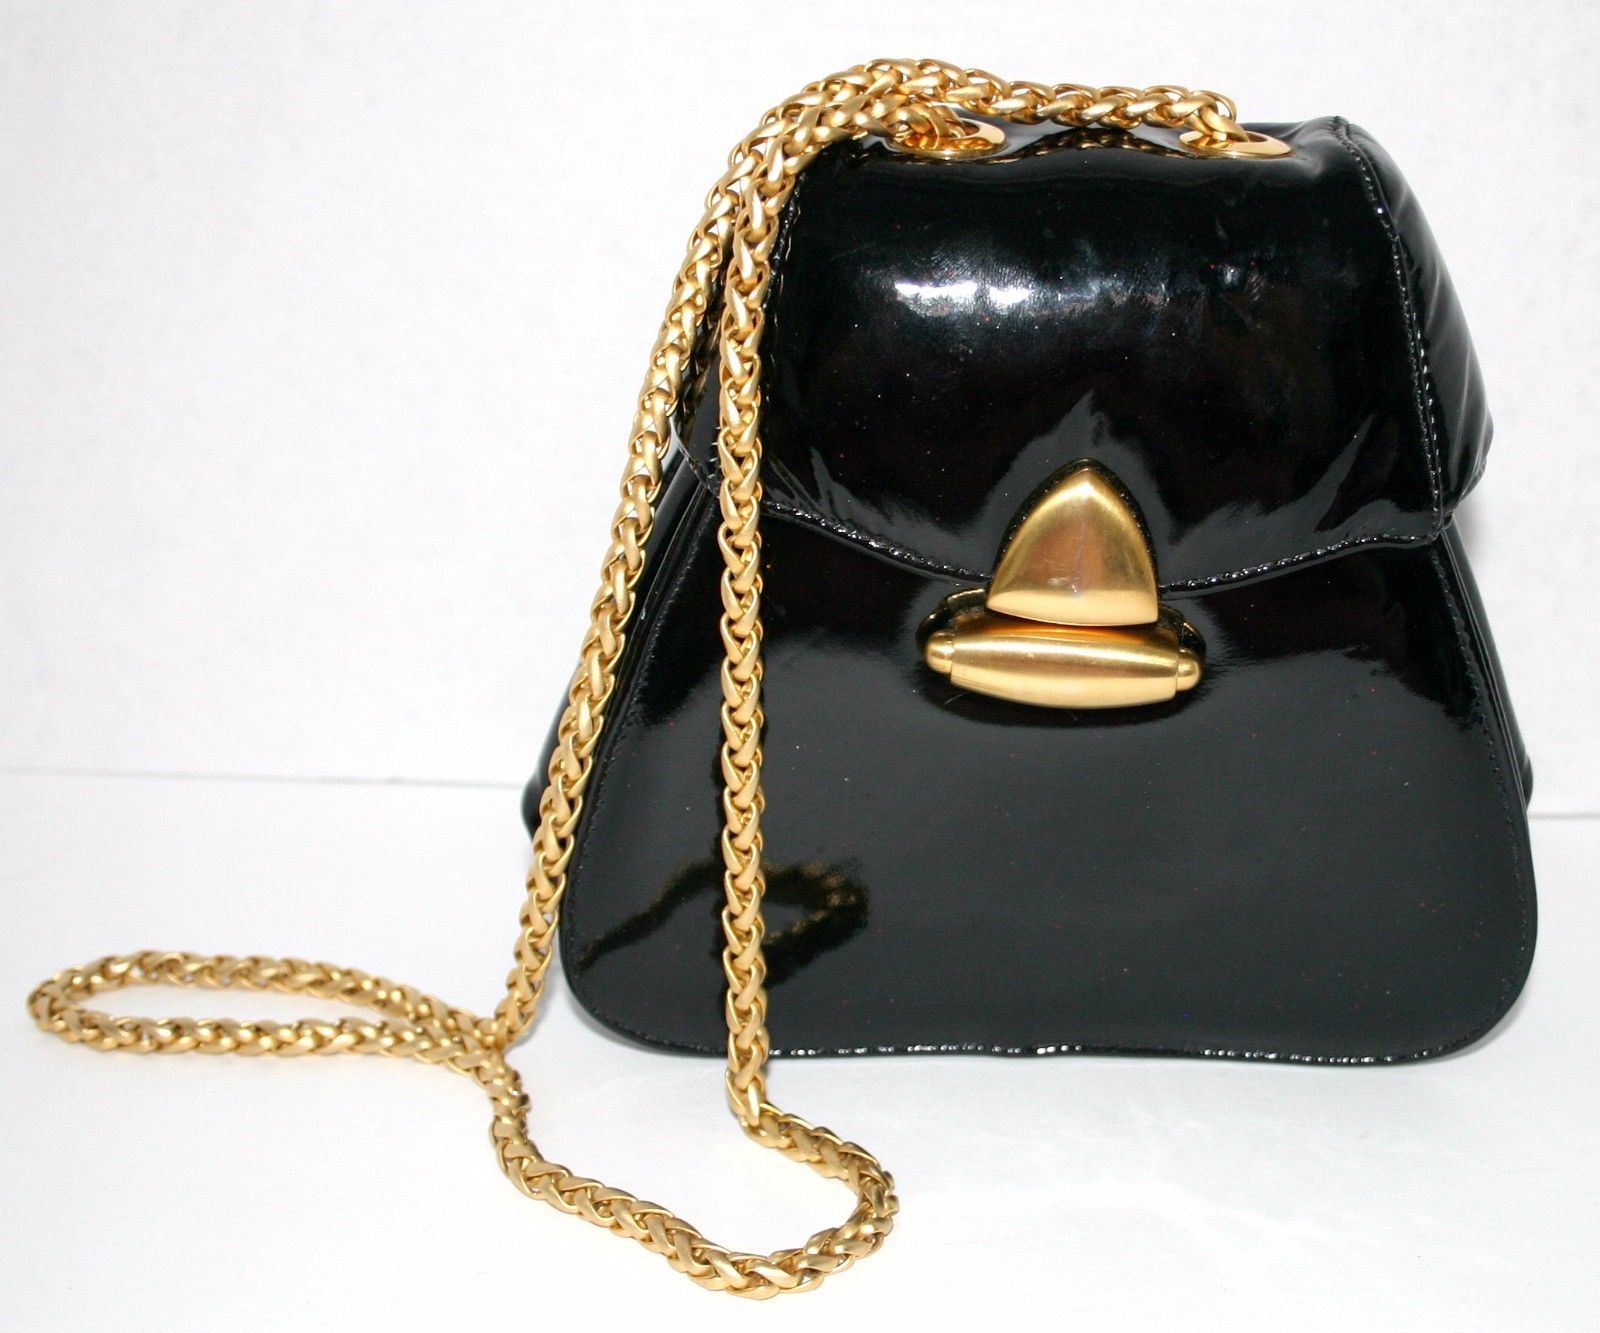 Exquisite Retro black patent evening bag Sondra Roberts heavy gold chain strap - Handbags & Purses